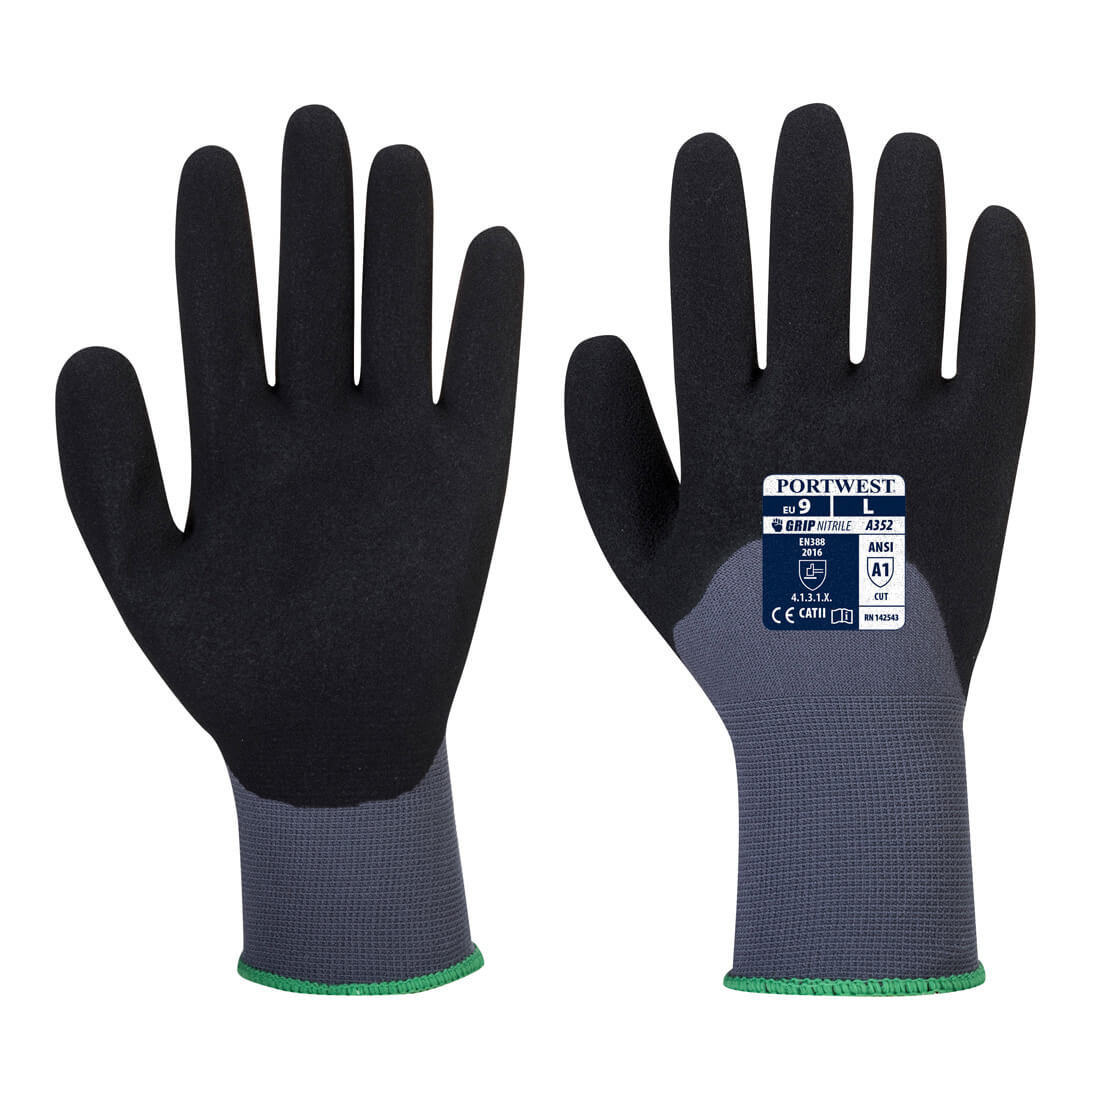 DermiFlex Ultra Glove - Personal protection